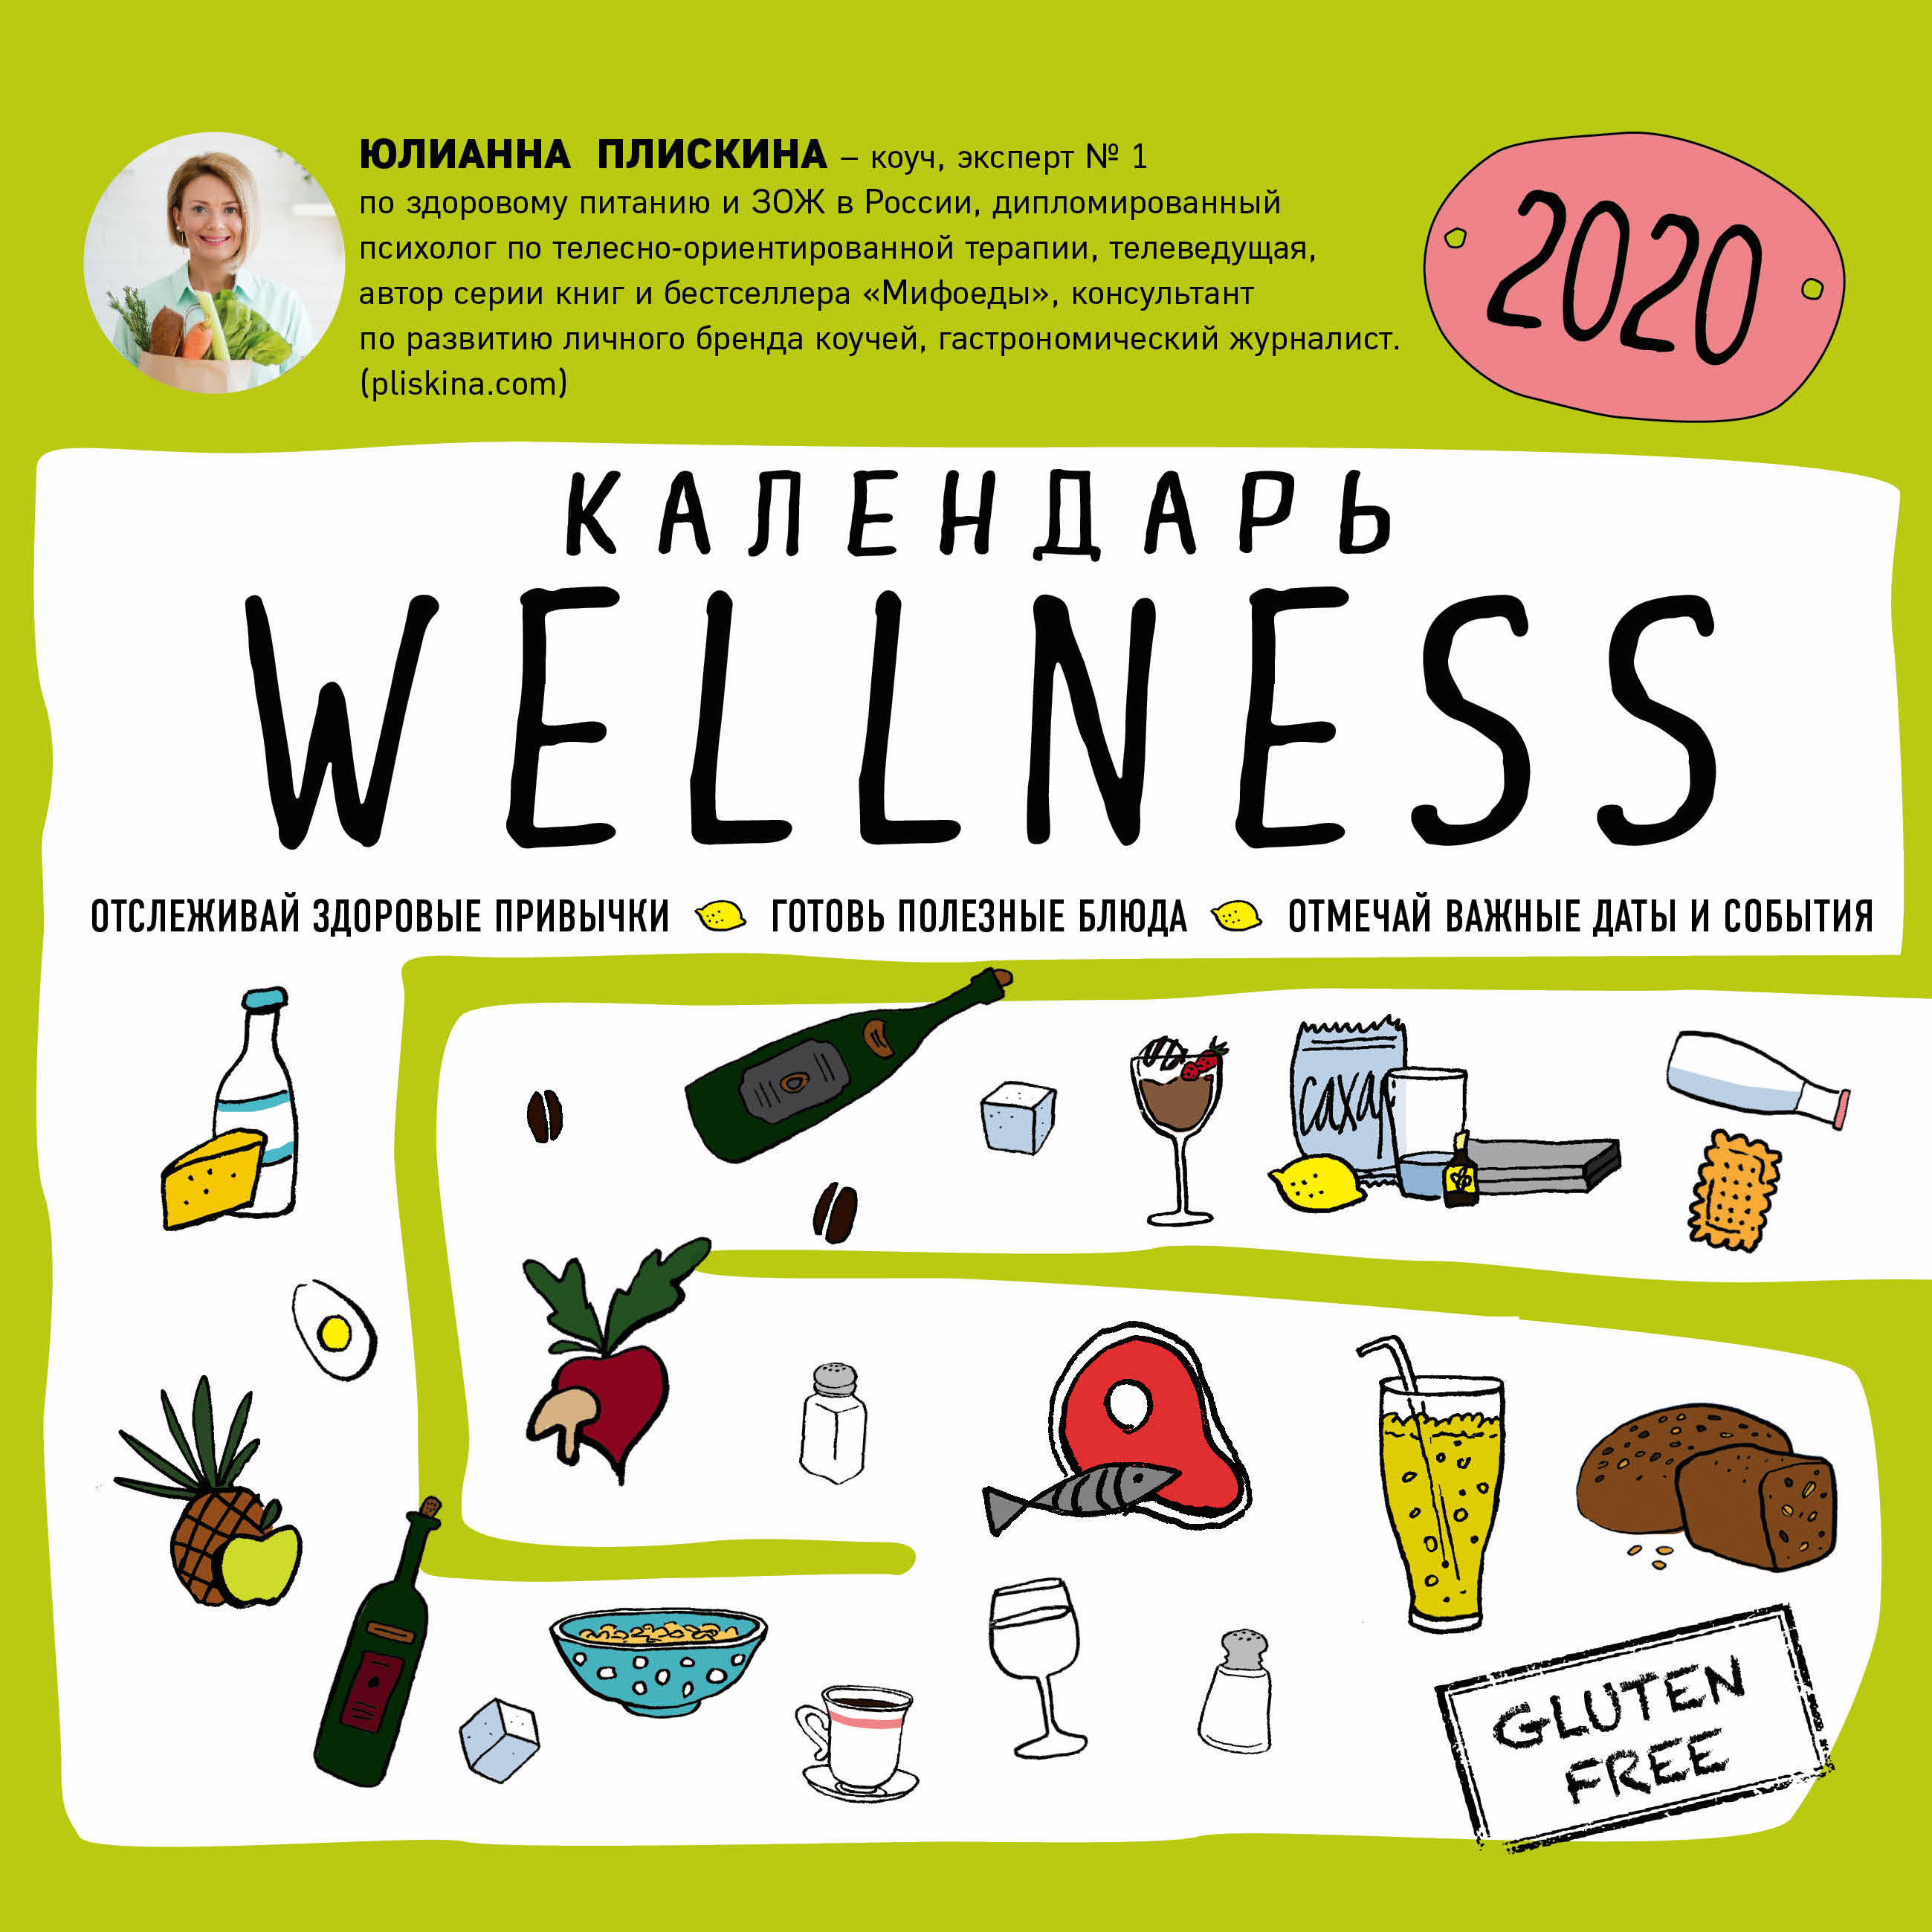 Wellness календарь от Юлианны Плискиной на 2020 год | Плискина Юлианна Владимировна